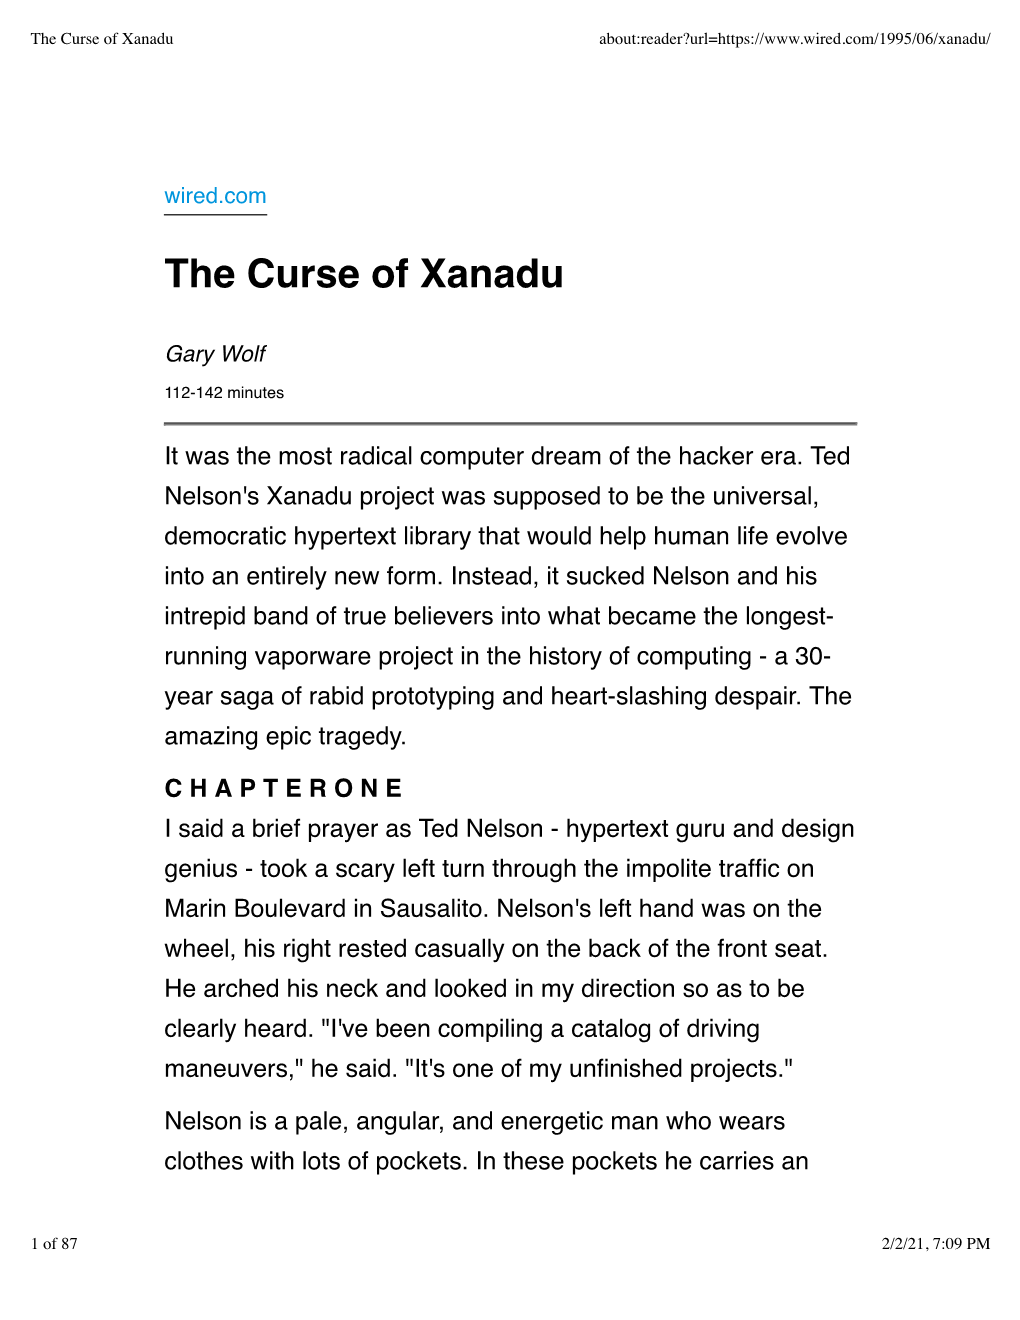 The Curse of Xanadu About:Reader?Url=